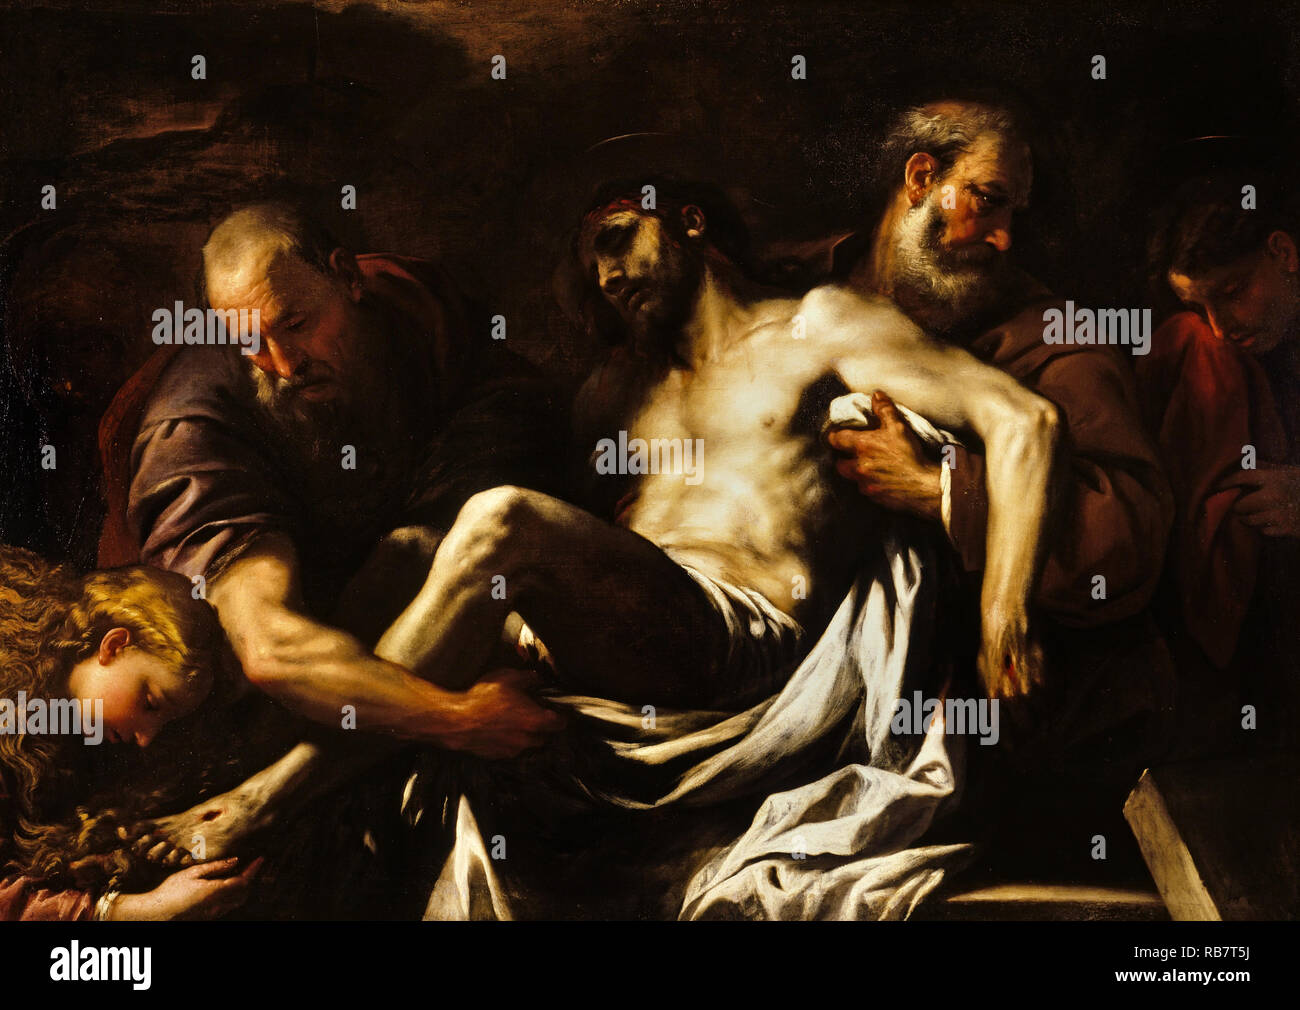 Luca Giordano, die Grablegung Christi 1655 Öl auf Leinwand, Philbrook Museum of Art, USA. Stockfoto